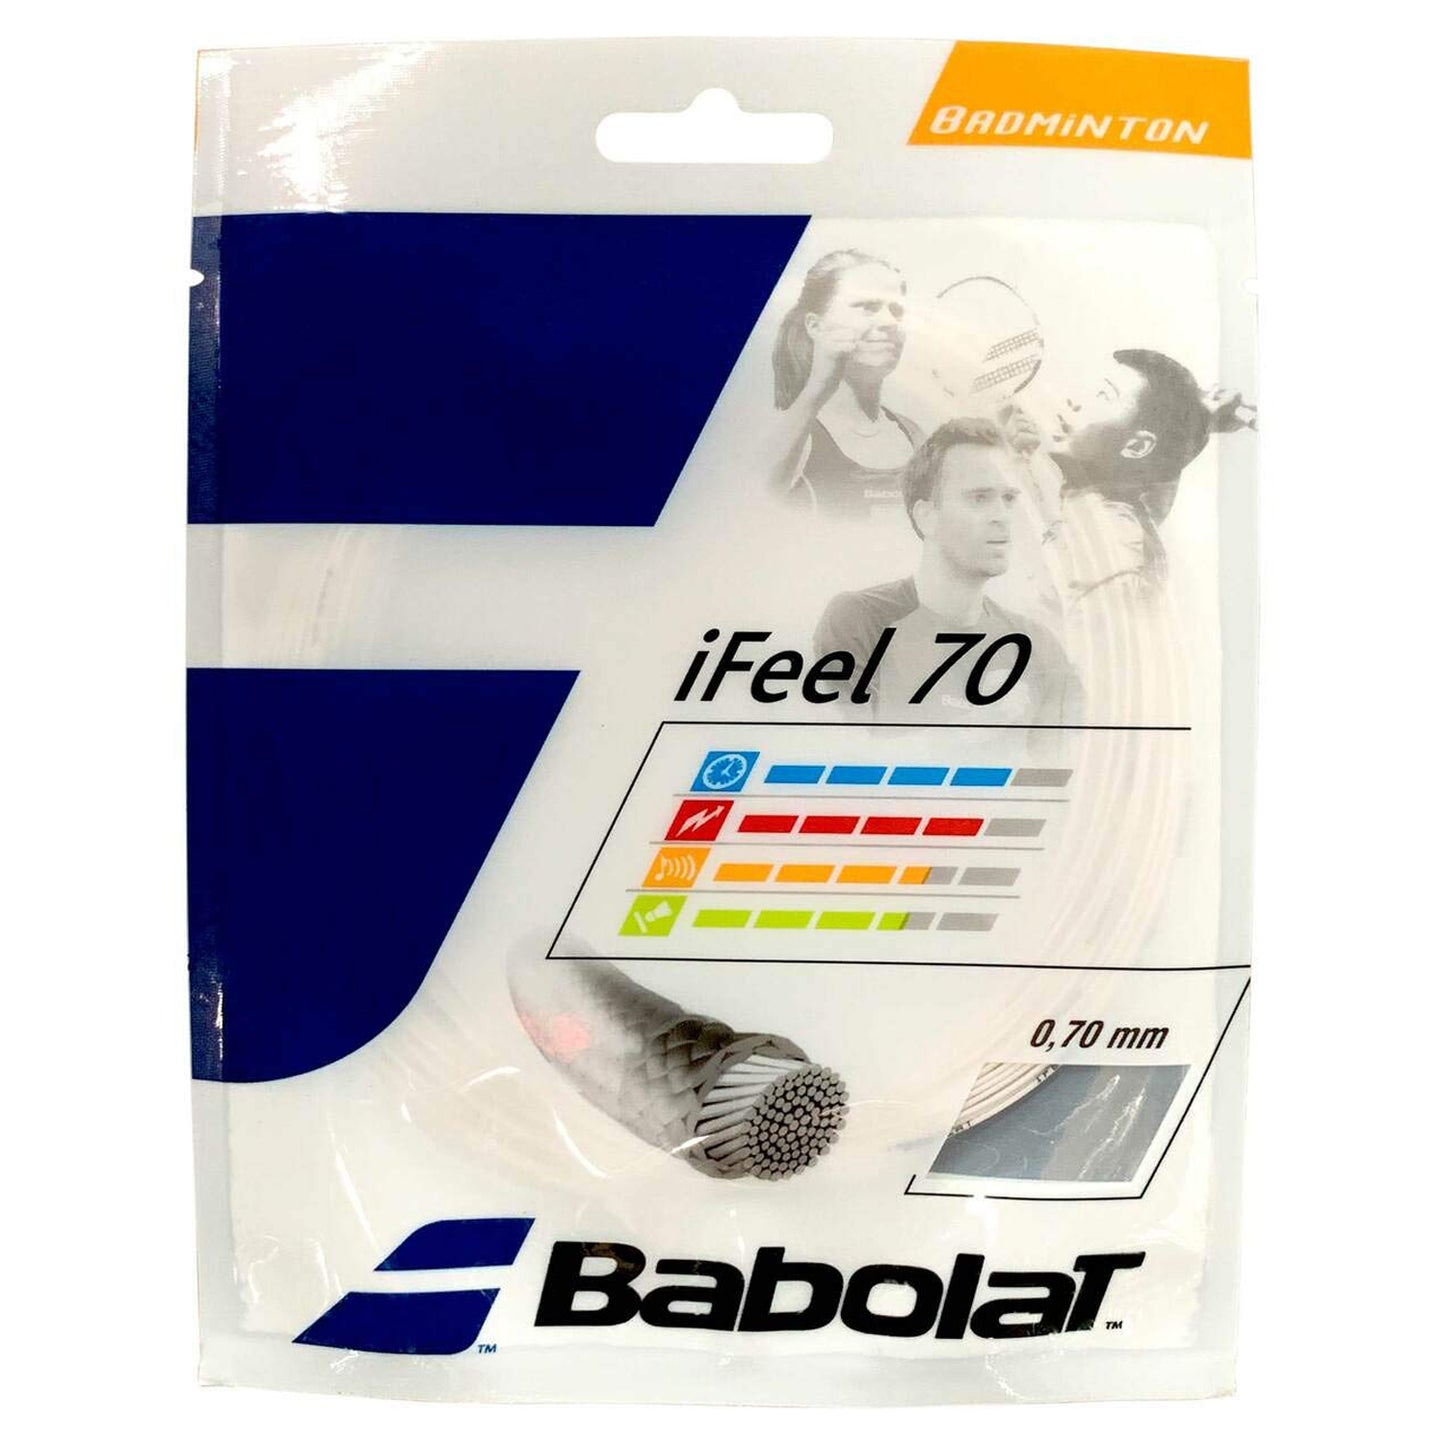 Babolat iFeel 70 Badminton String - Best Price online Prokicksports.com